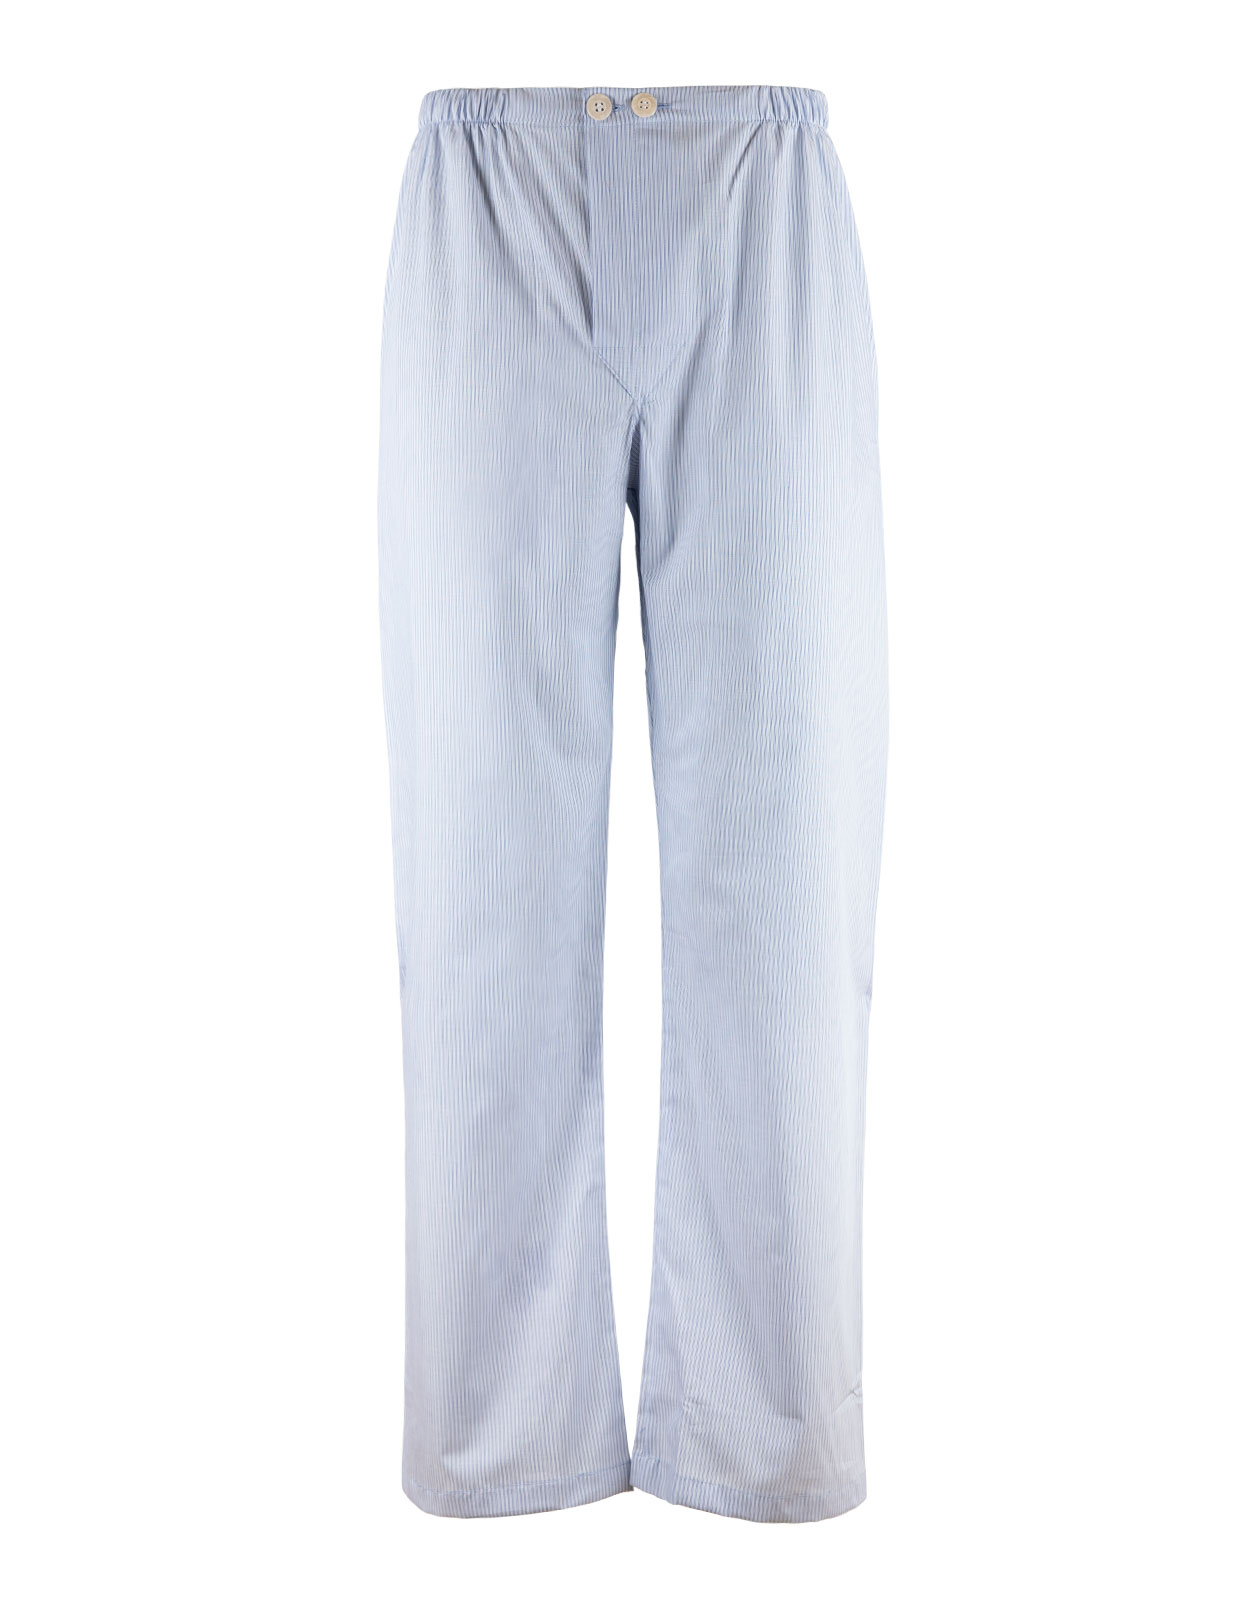 Saville Pyjamas Blå Stl 56